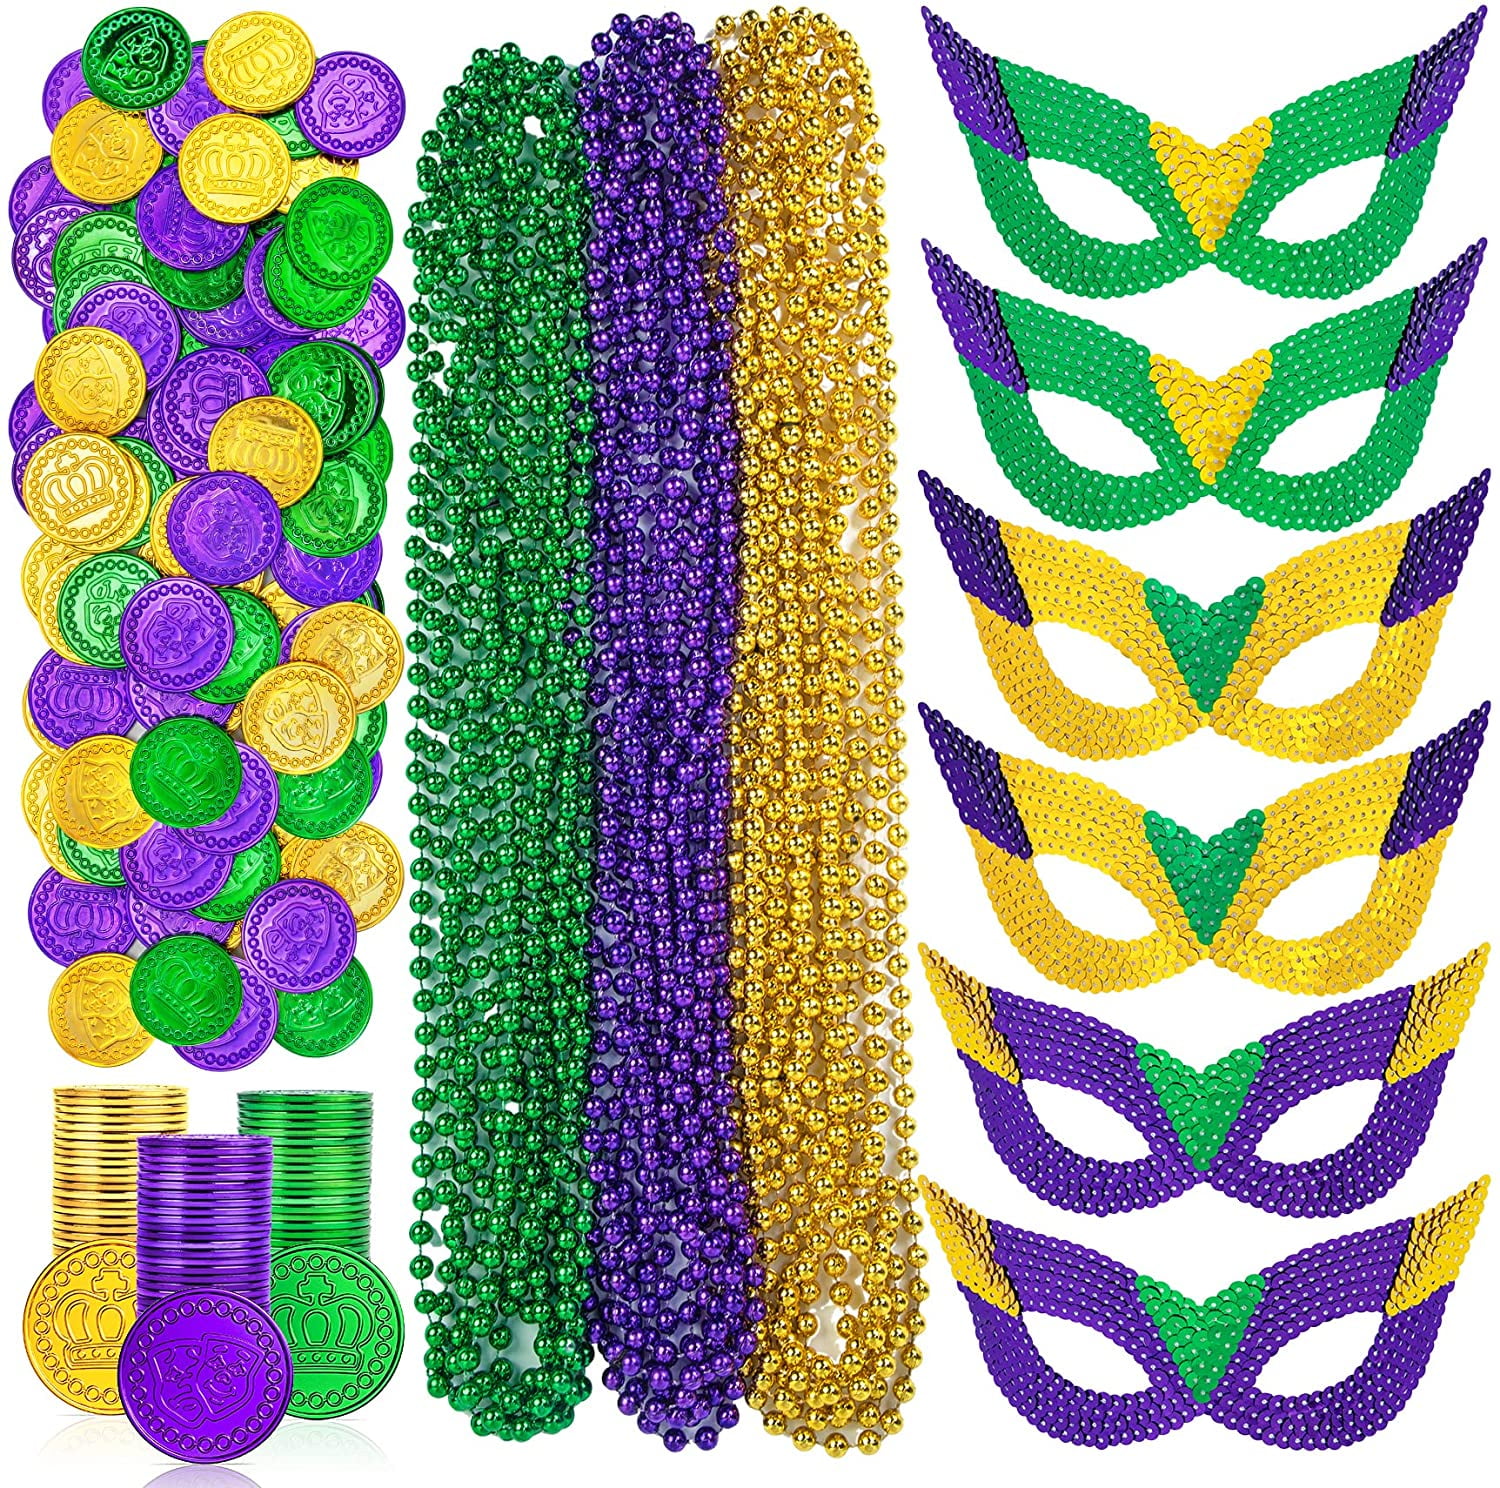 180pcs Mardi Gras Decorations Including Mardi Gras Mask Beads Necklaces Coins Party Favors - Mardi Gras Accessories for Mardi Gras Parade Masquerade